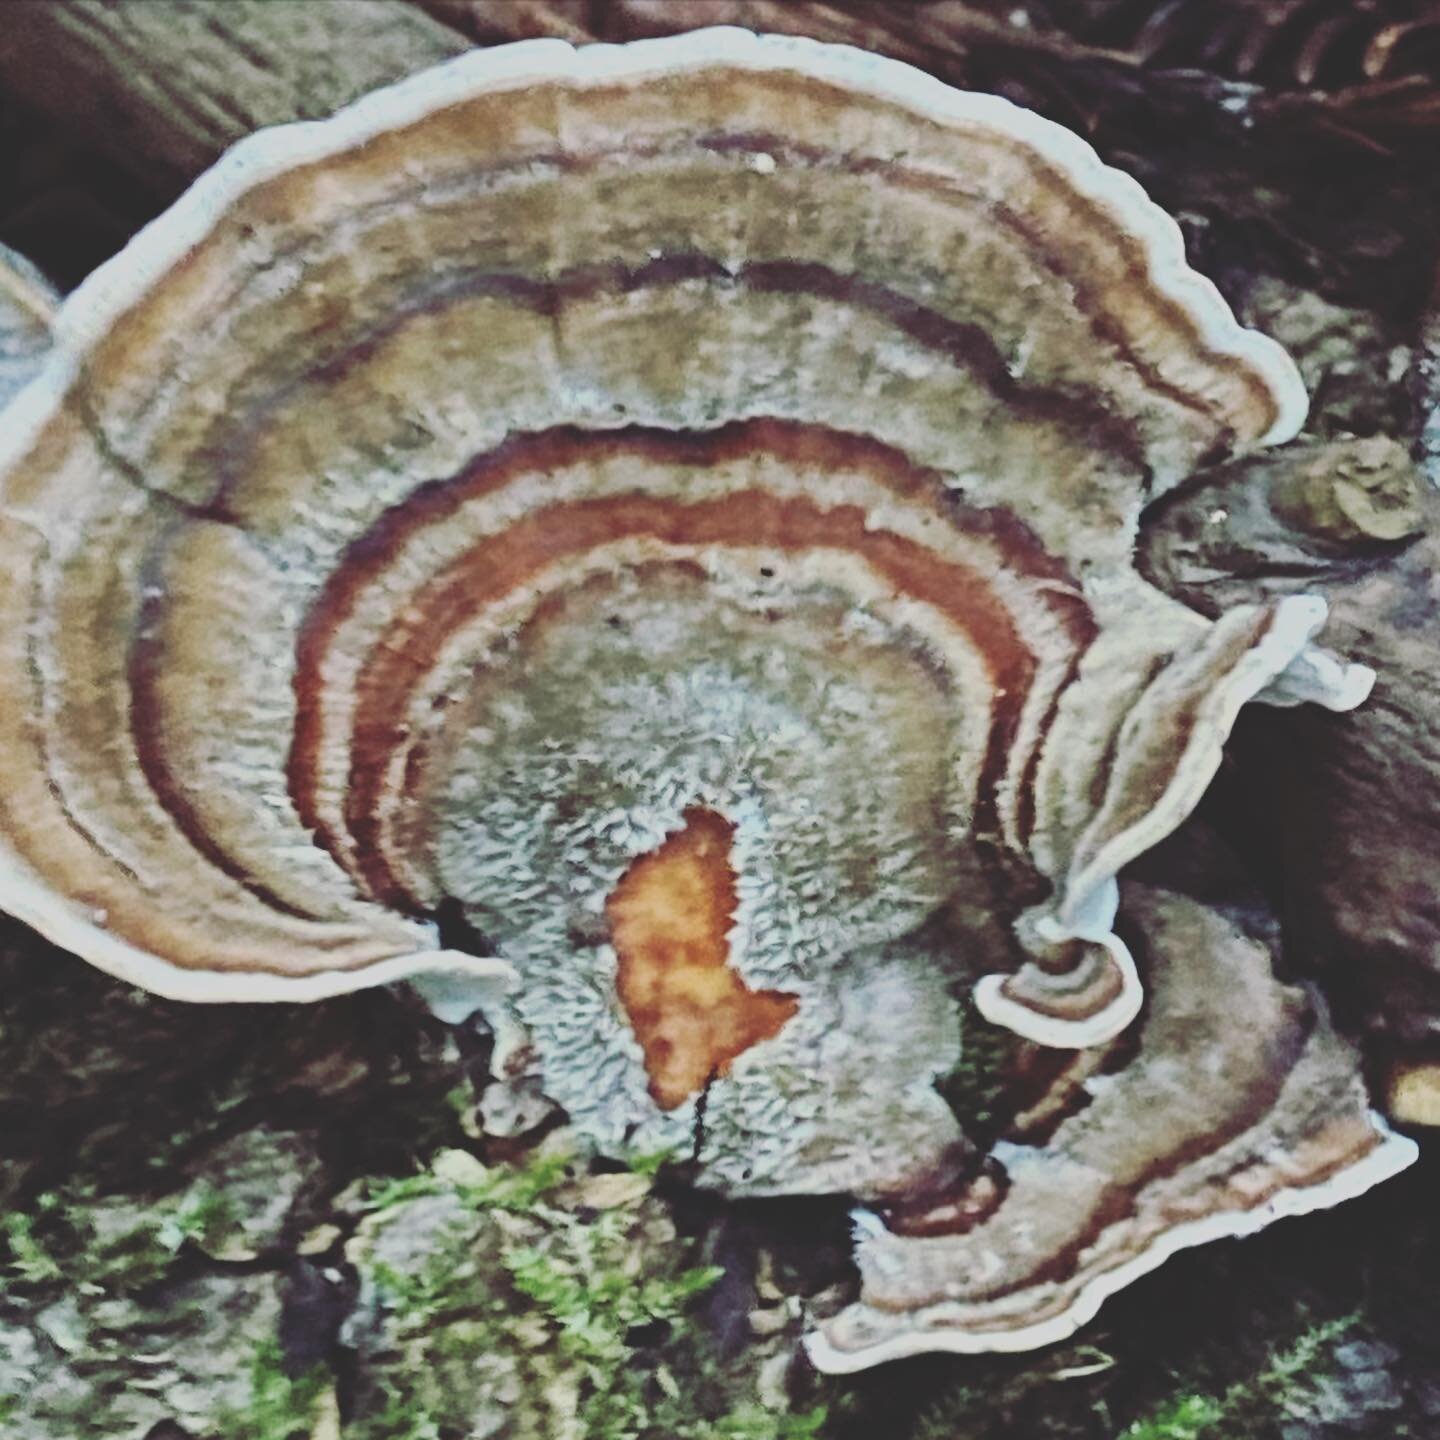 I sat down to sketch this mushroom and low and behold-I found a very distinct face! Zoom in&mdash;do you see the mushroom fairy? #turkeytailmushroom #mushroomfairy #artjournaling #anticancermushroom #writingallison #curiousfinds